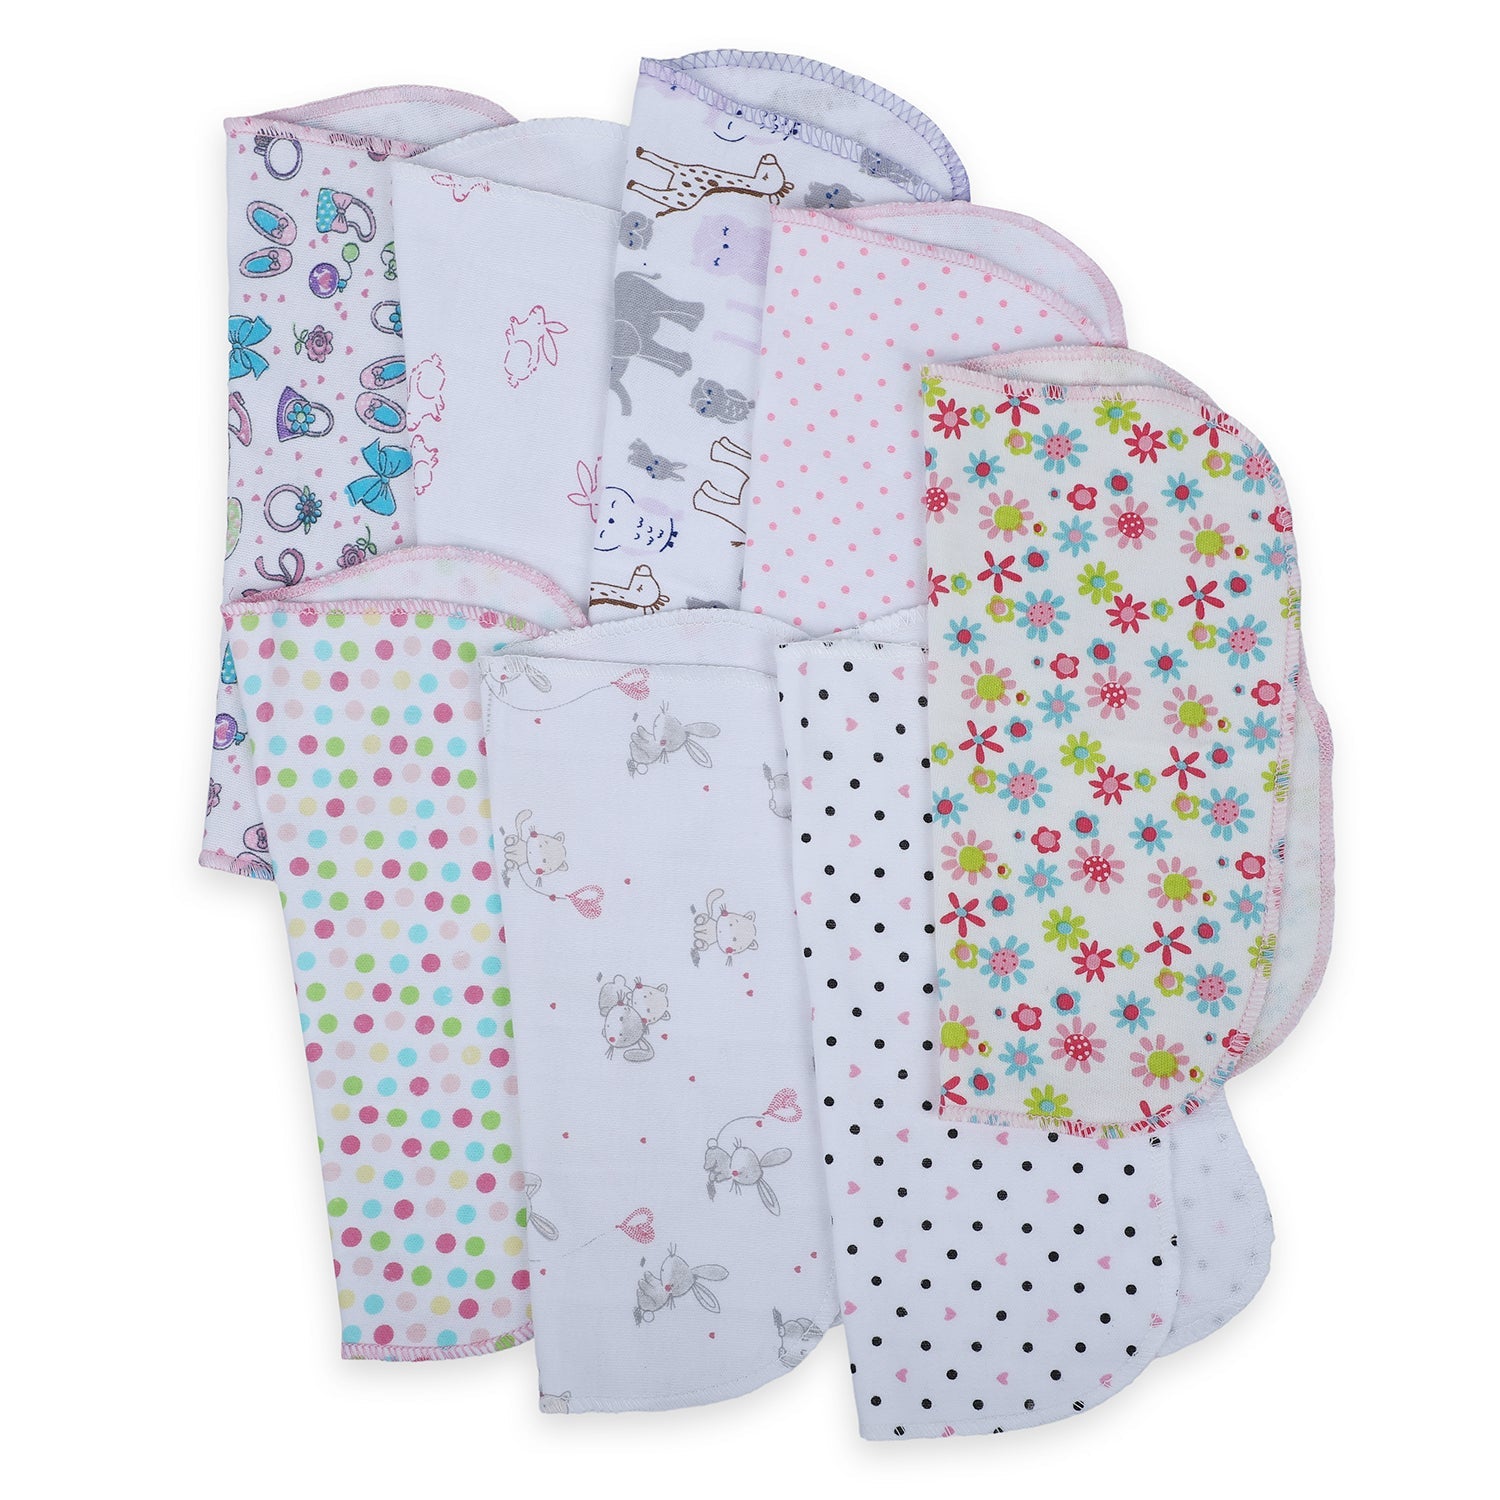 Baby Moo Girls Theme Cotton 20 x 20 cm Soft Hosiery Wash Cloth - Multicolour